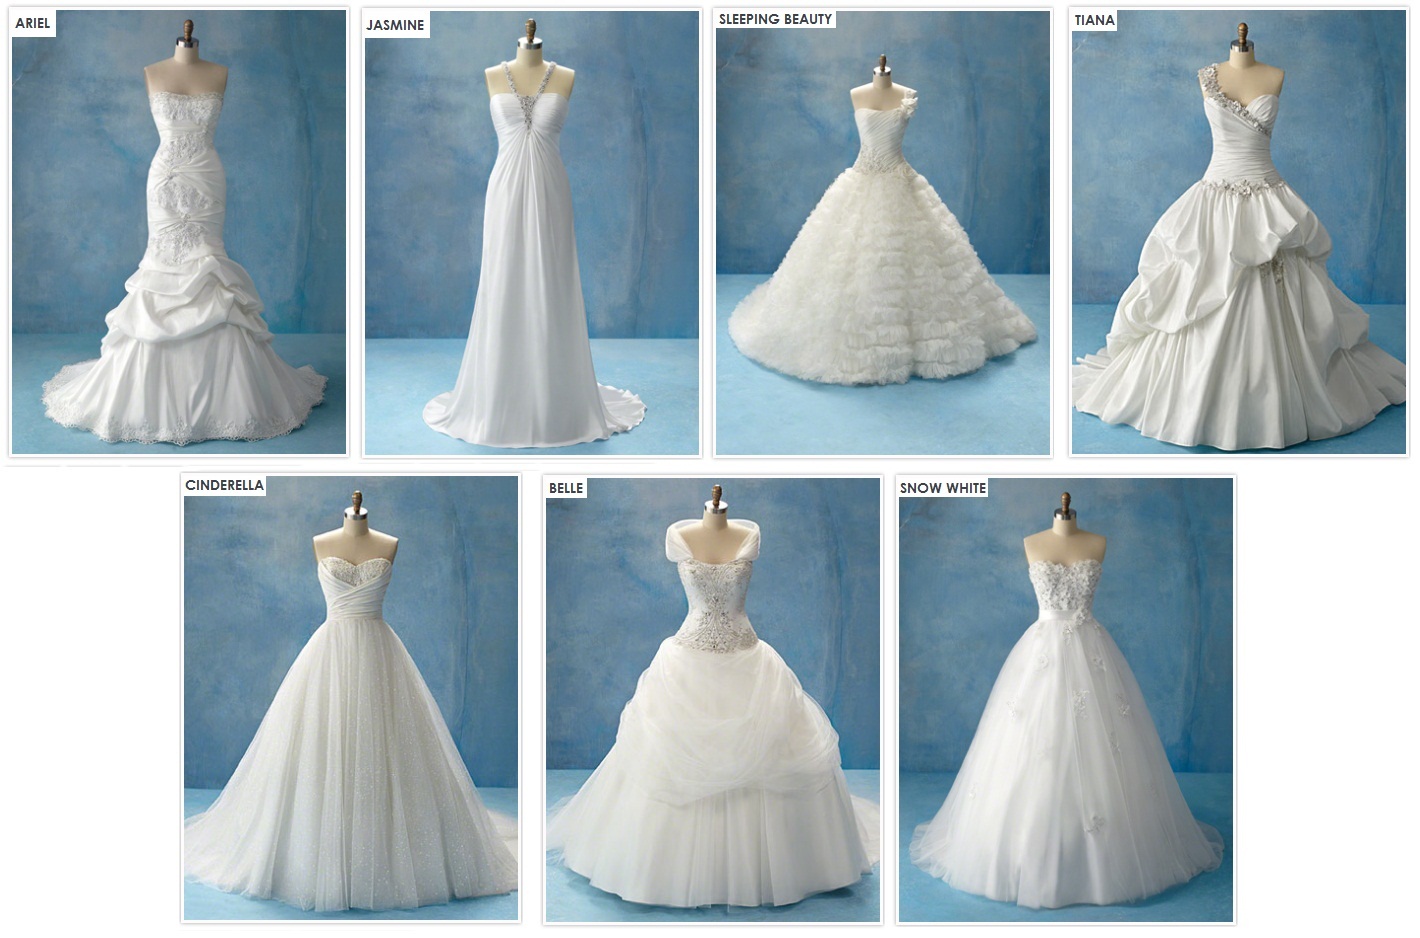 Disney Wedding Dresses | DressedUpGirl.com